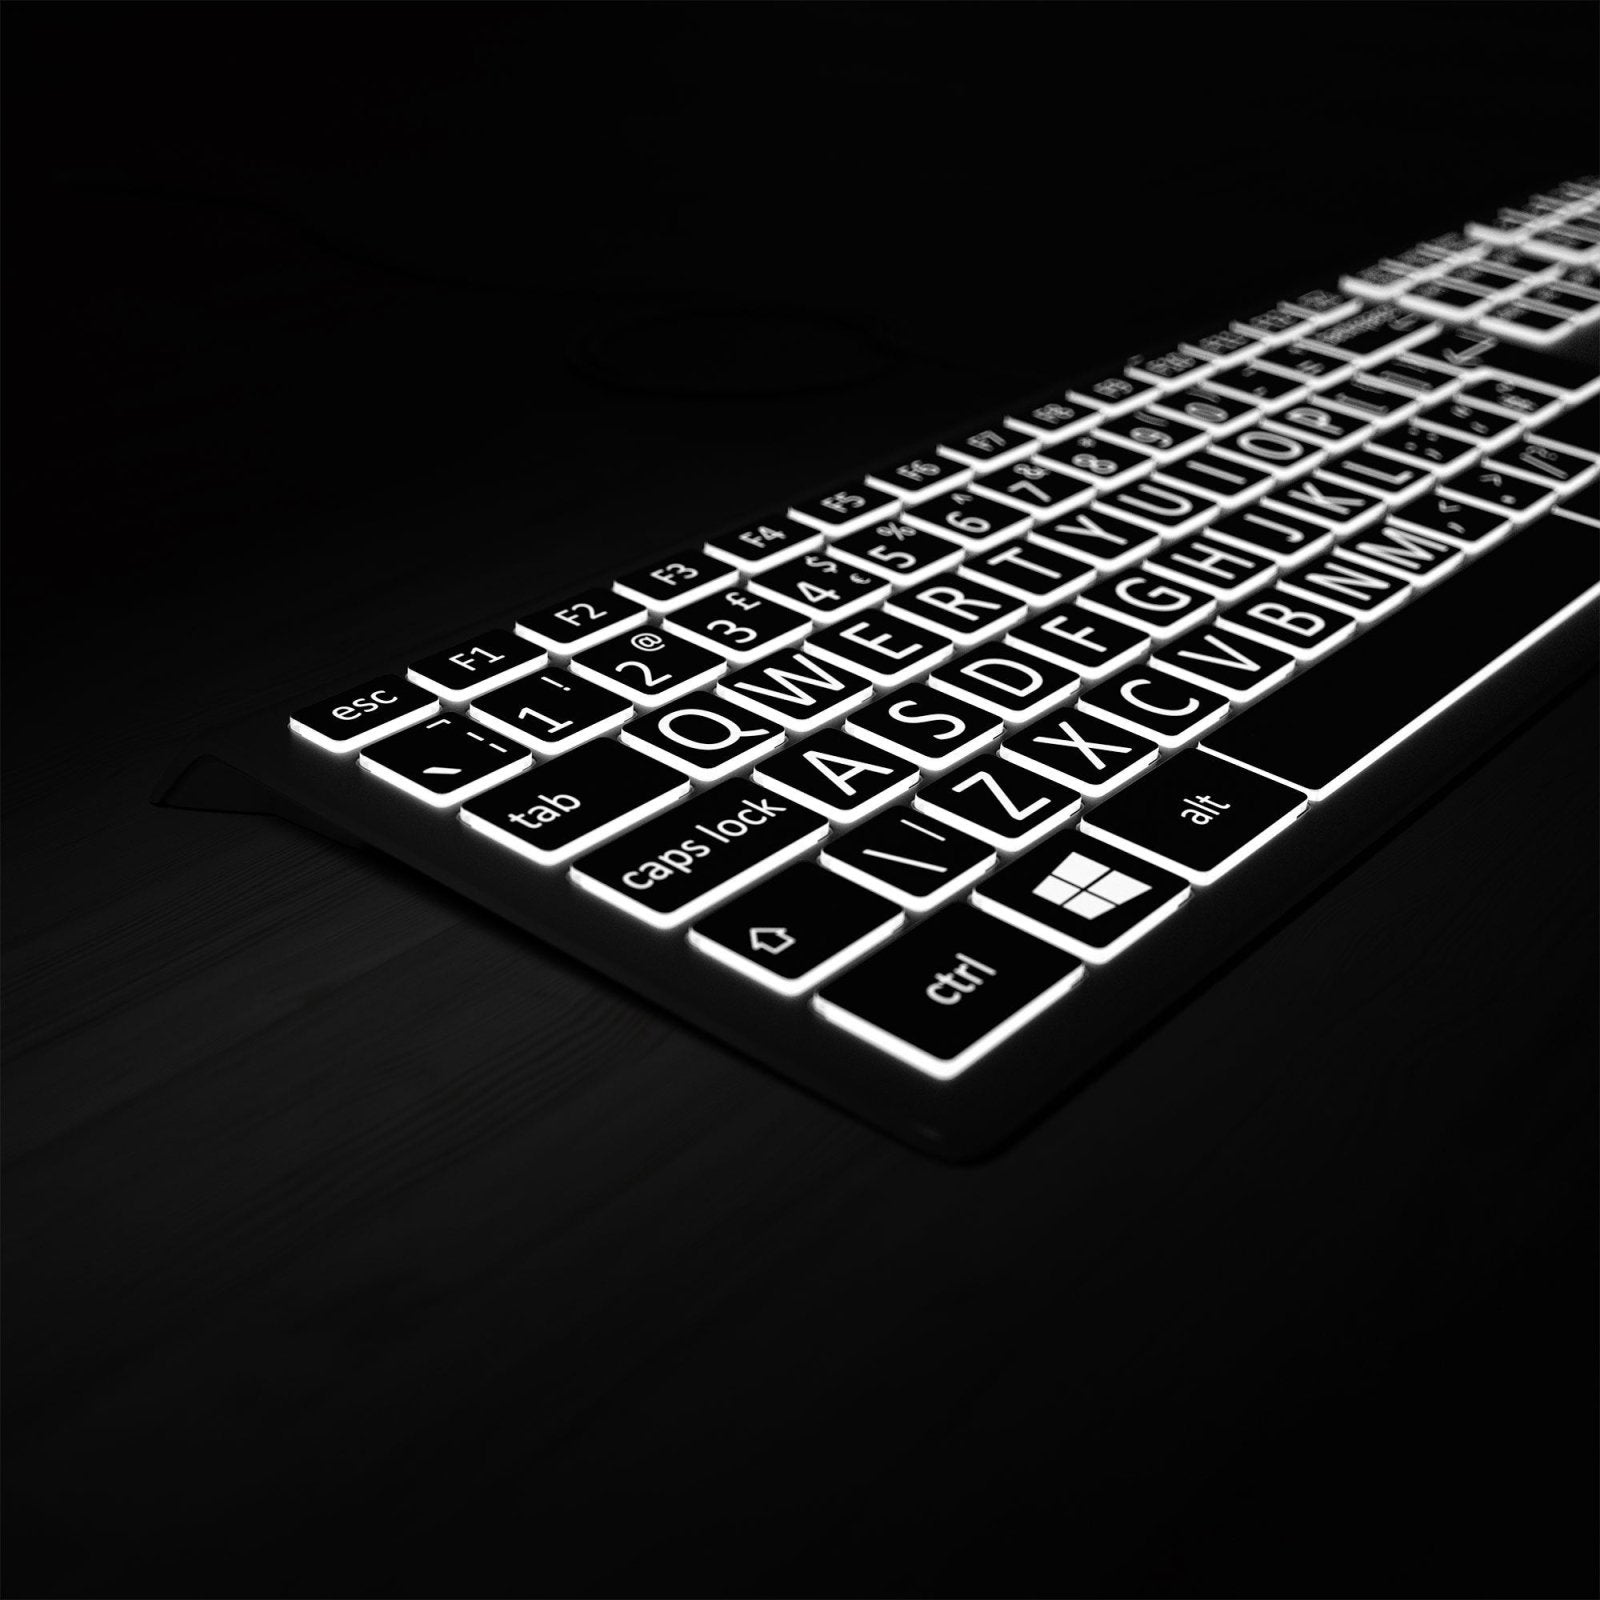 Backlit Feature Illuminating the Large Print Keys on Black and white Keyboard